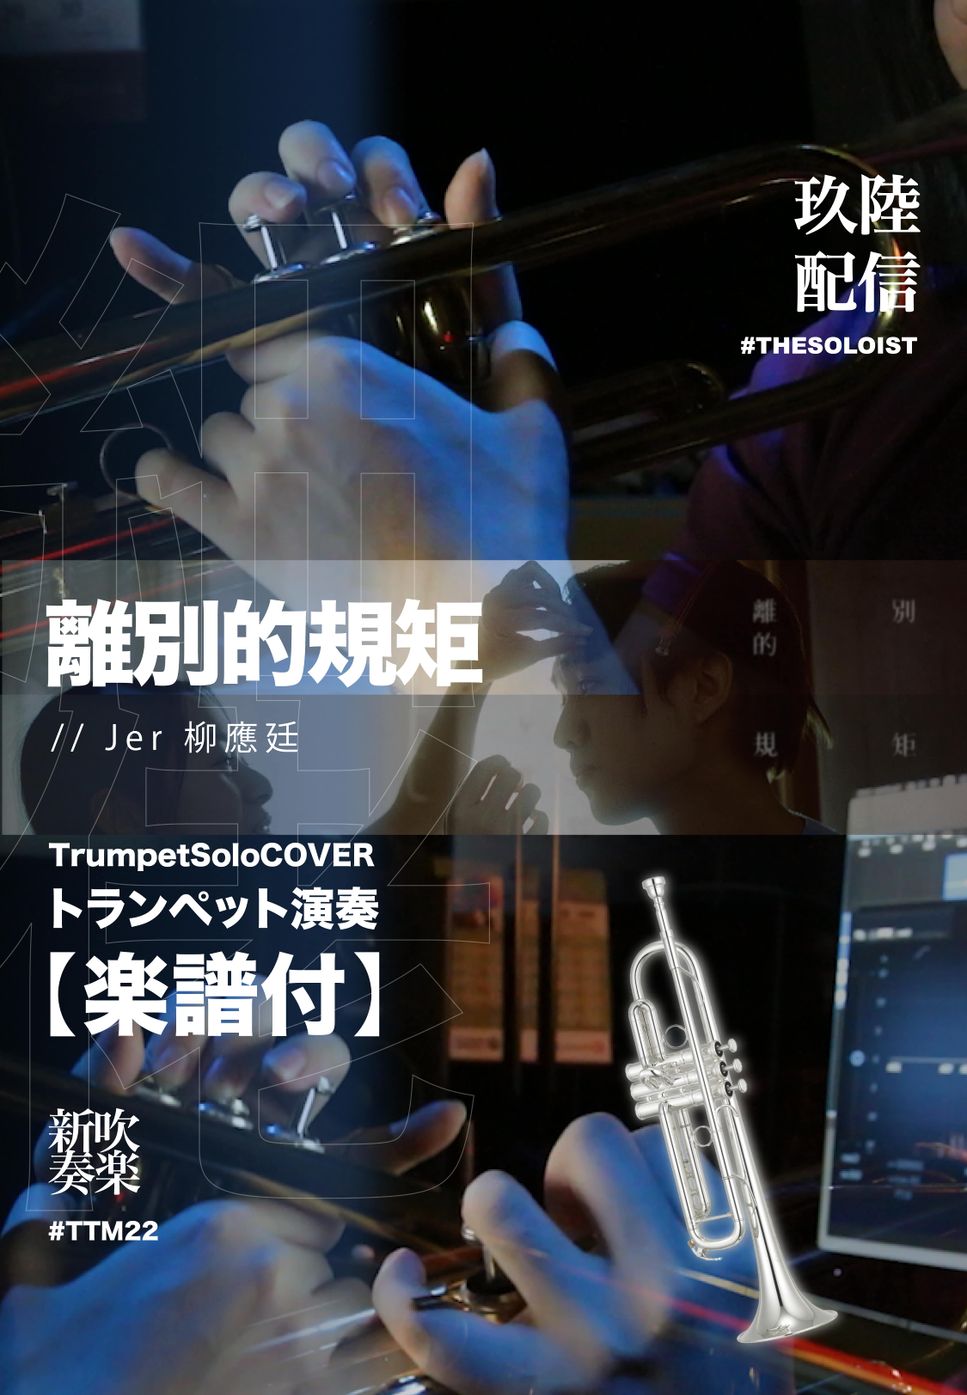 柳應廷 - 離別的規矩 (Trumpet) by YipFung